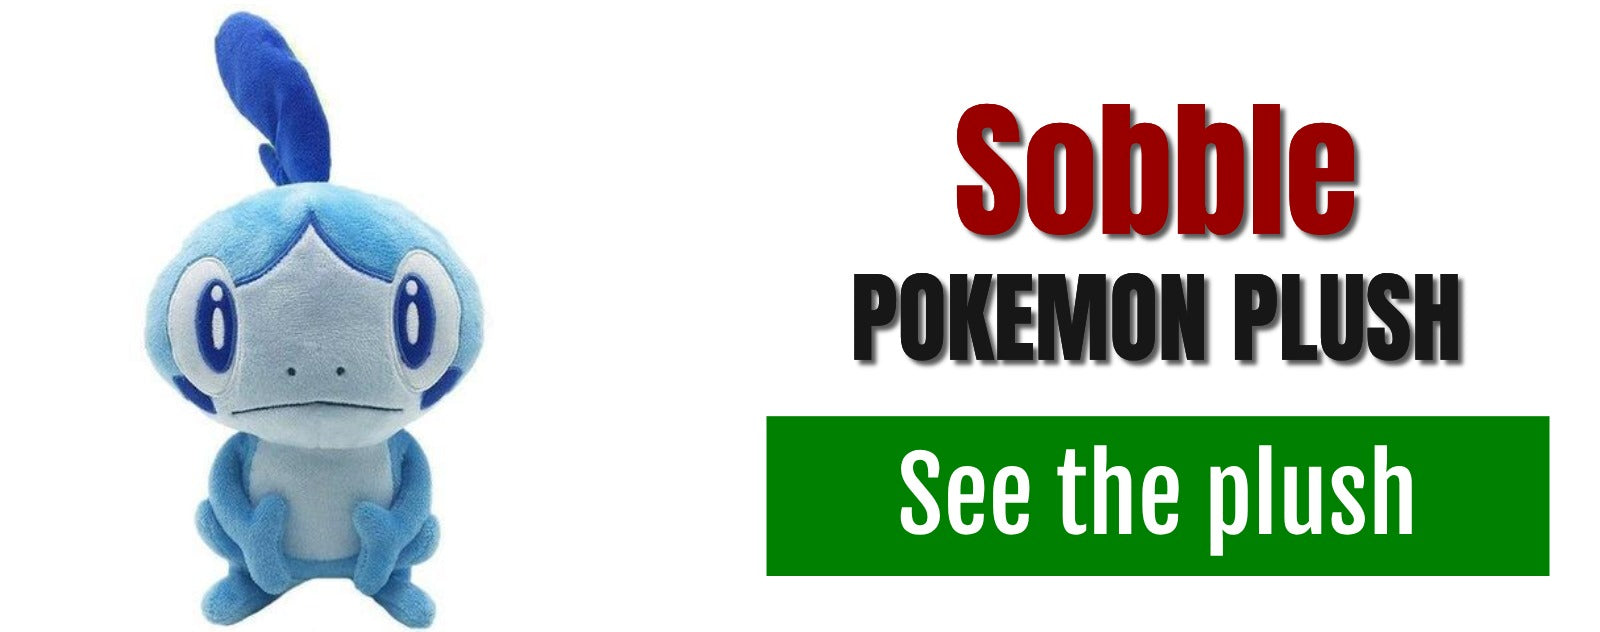 Sobble pokemon plush banner pokemon faction